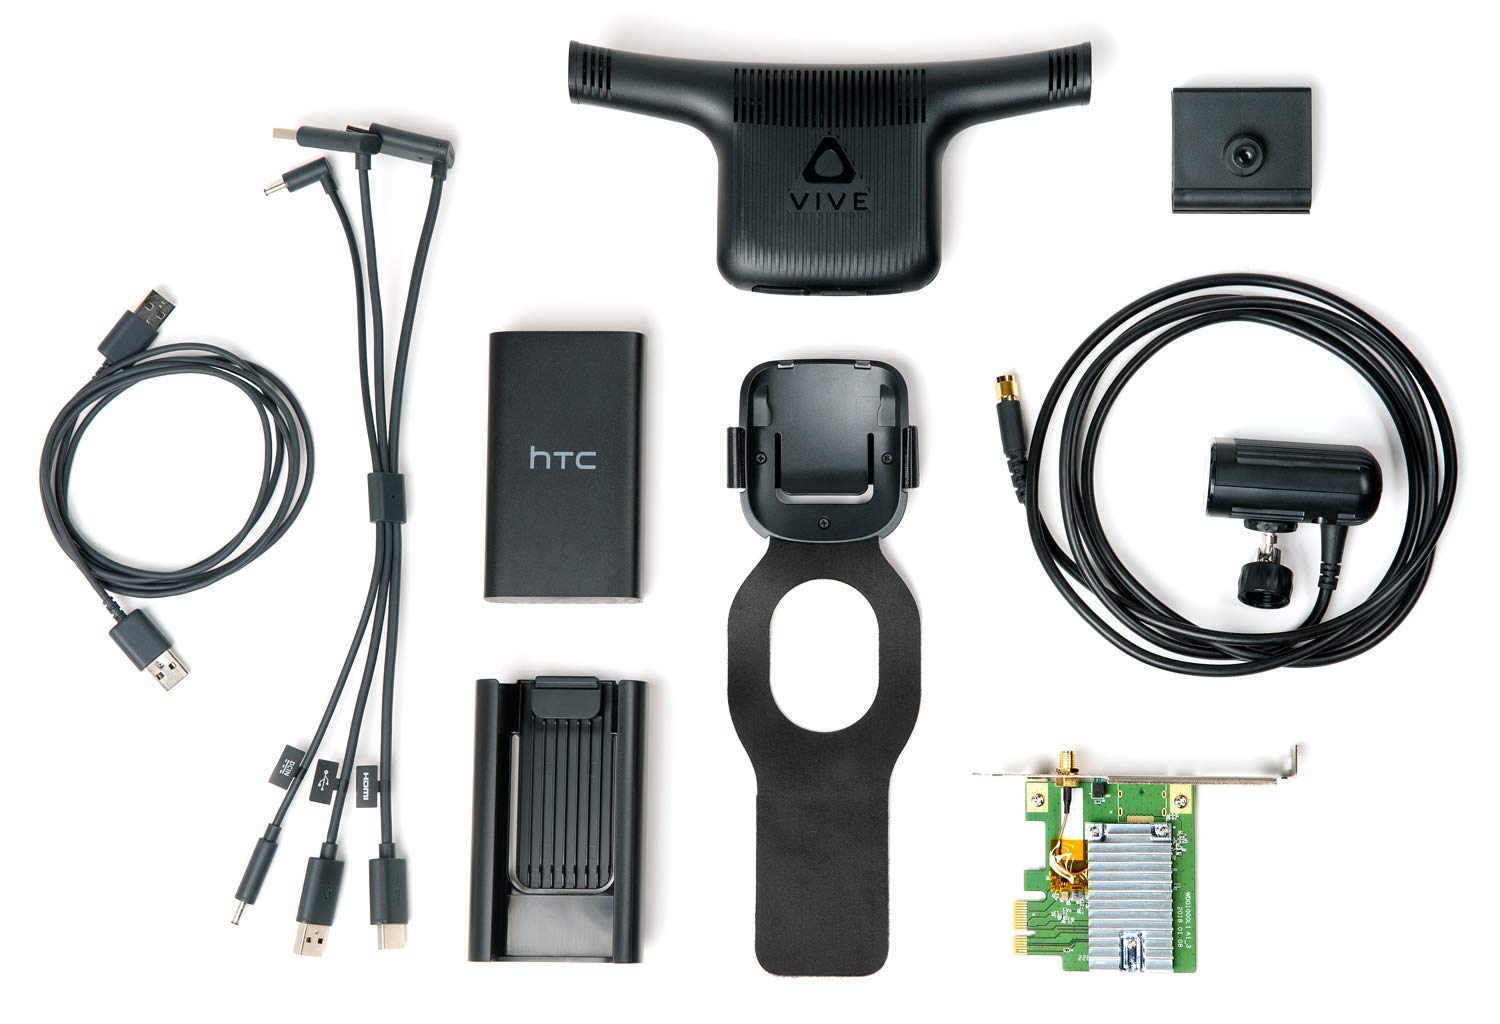 Vive adapter kit